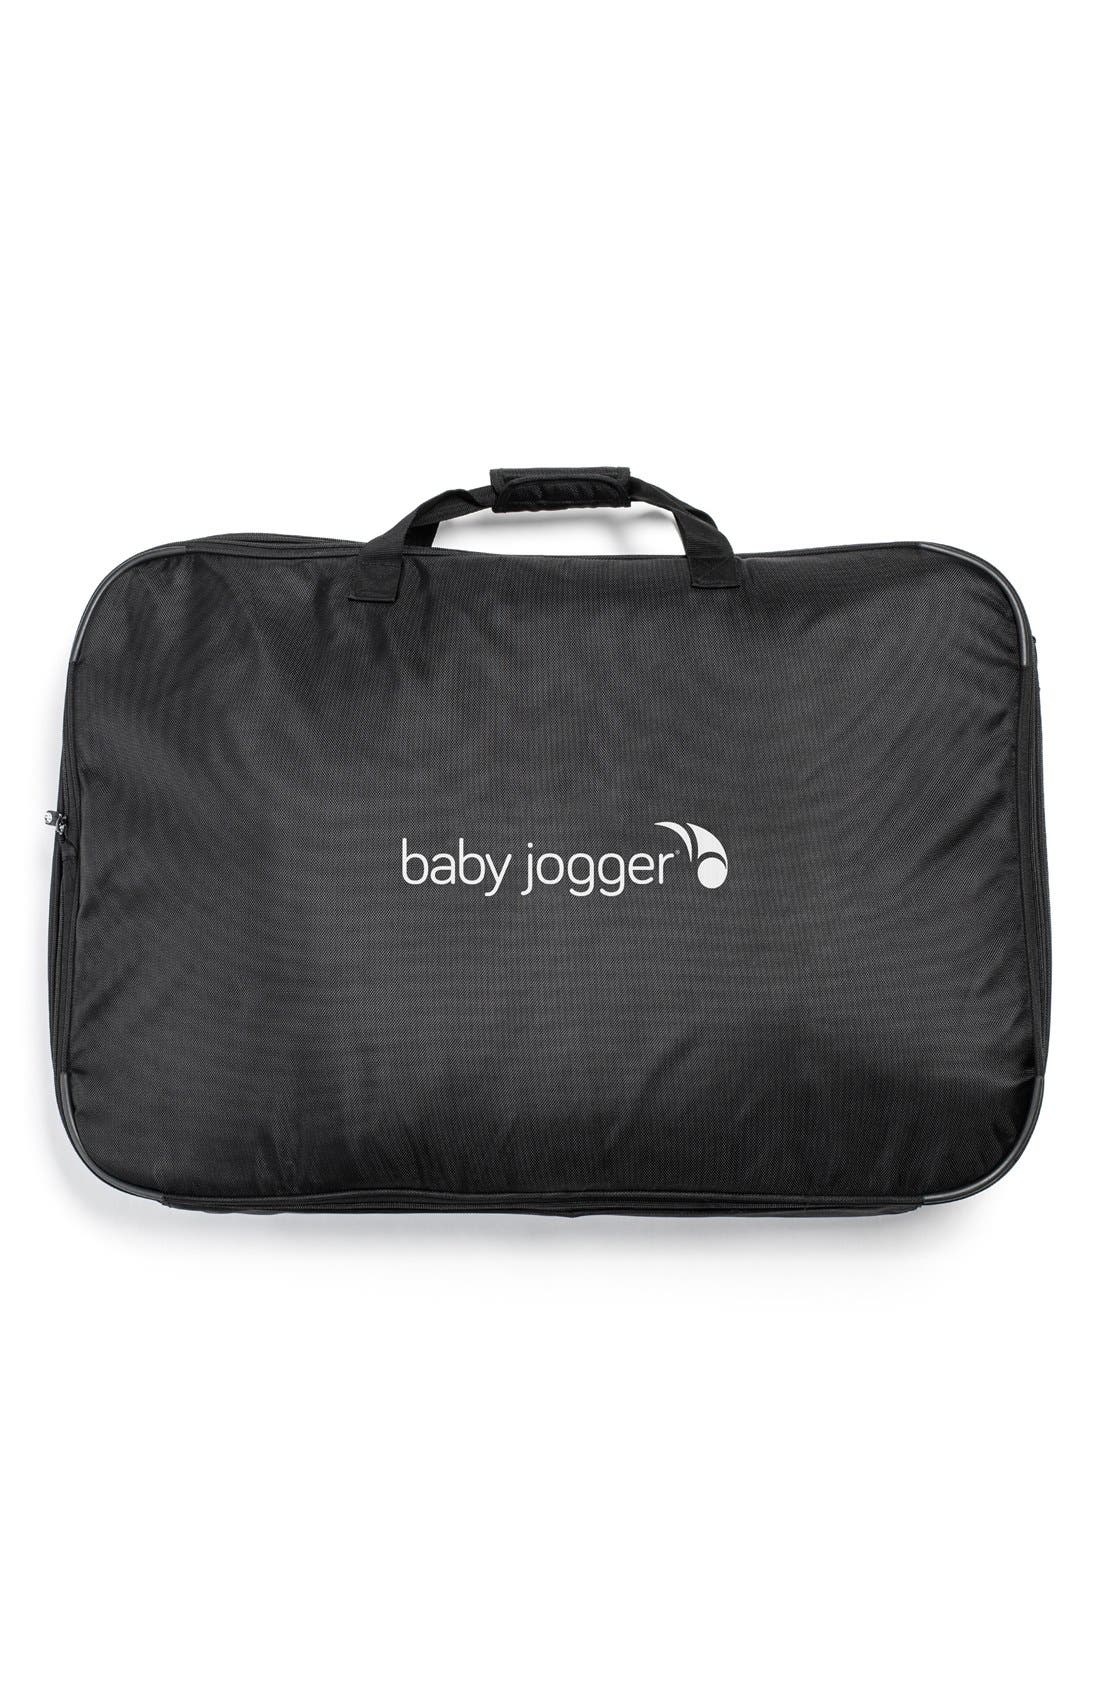 baby jogger city mini gt travel bag